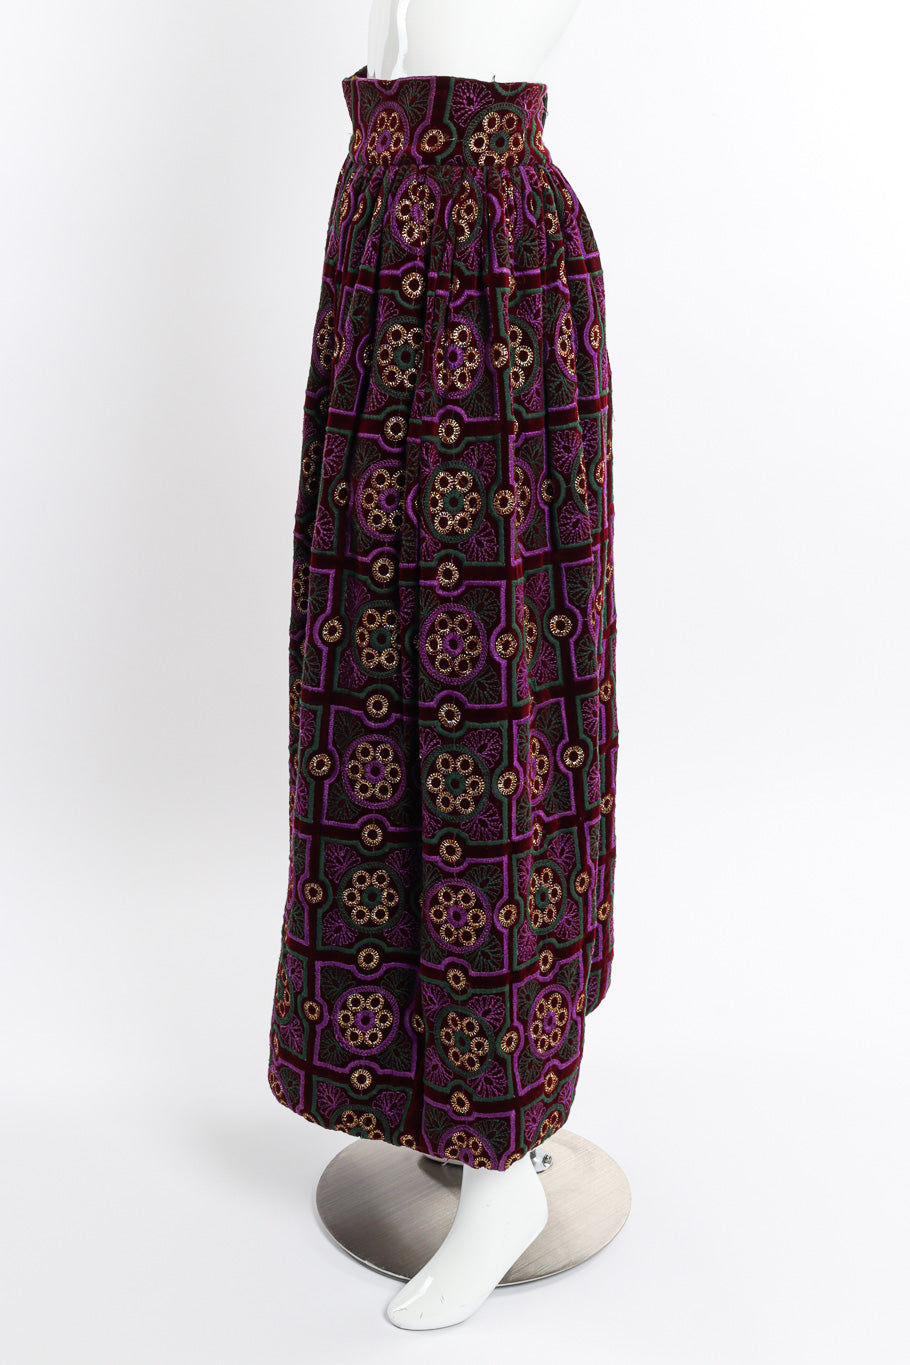 Vintage Adolfo Geometric Embroidered Velvet Skirt side view on mannequin @recessla